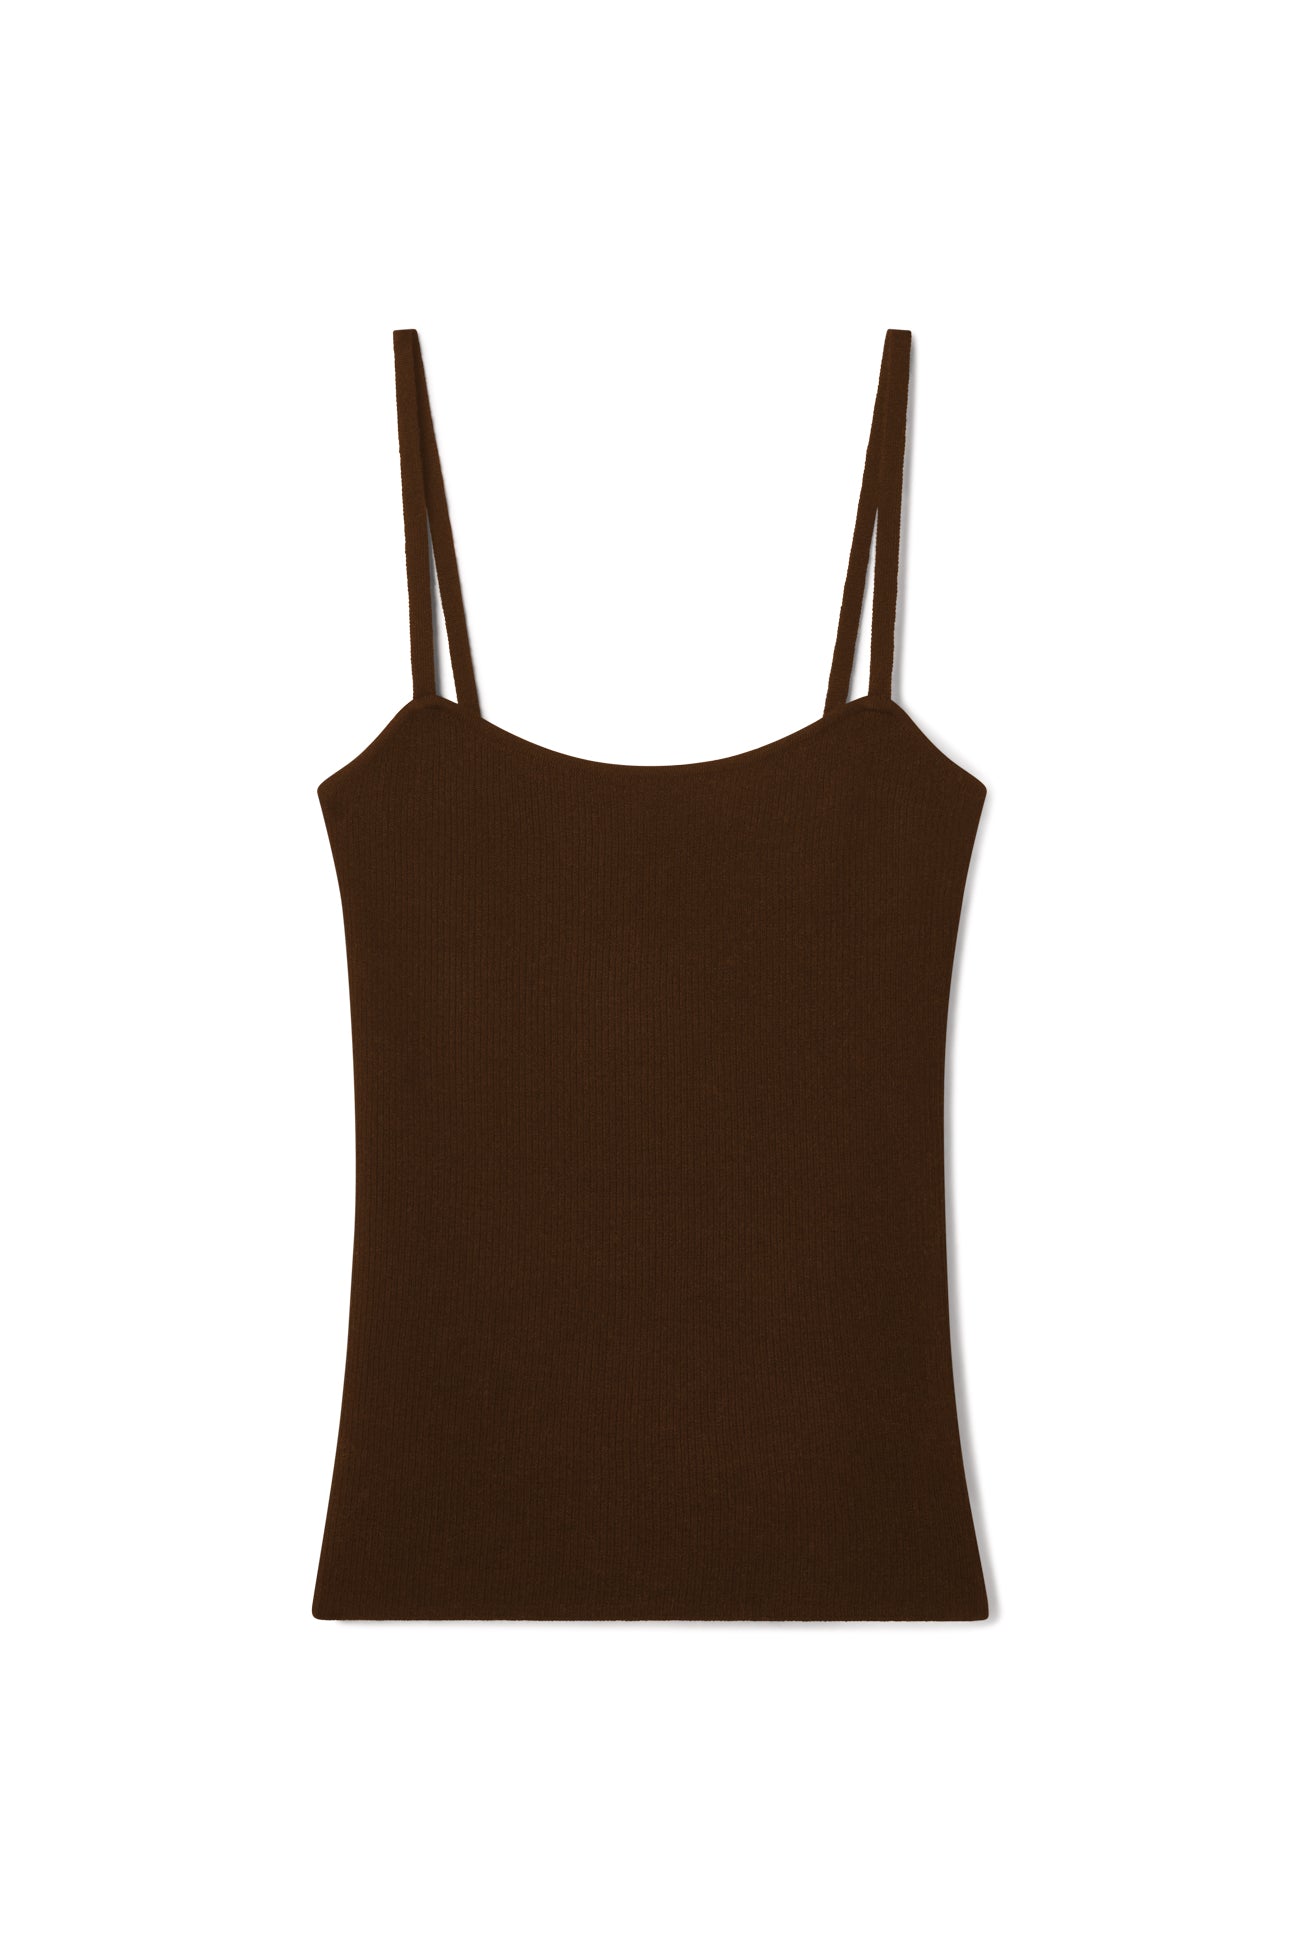  4 Piece Camisole For Women Basic Cami Undershirt Adjustable  Spaghetti Strap Tank Top Black Darkgray Black Darkgray M